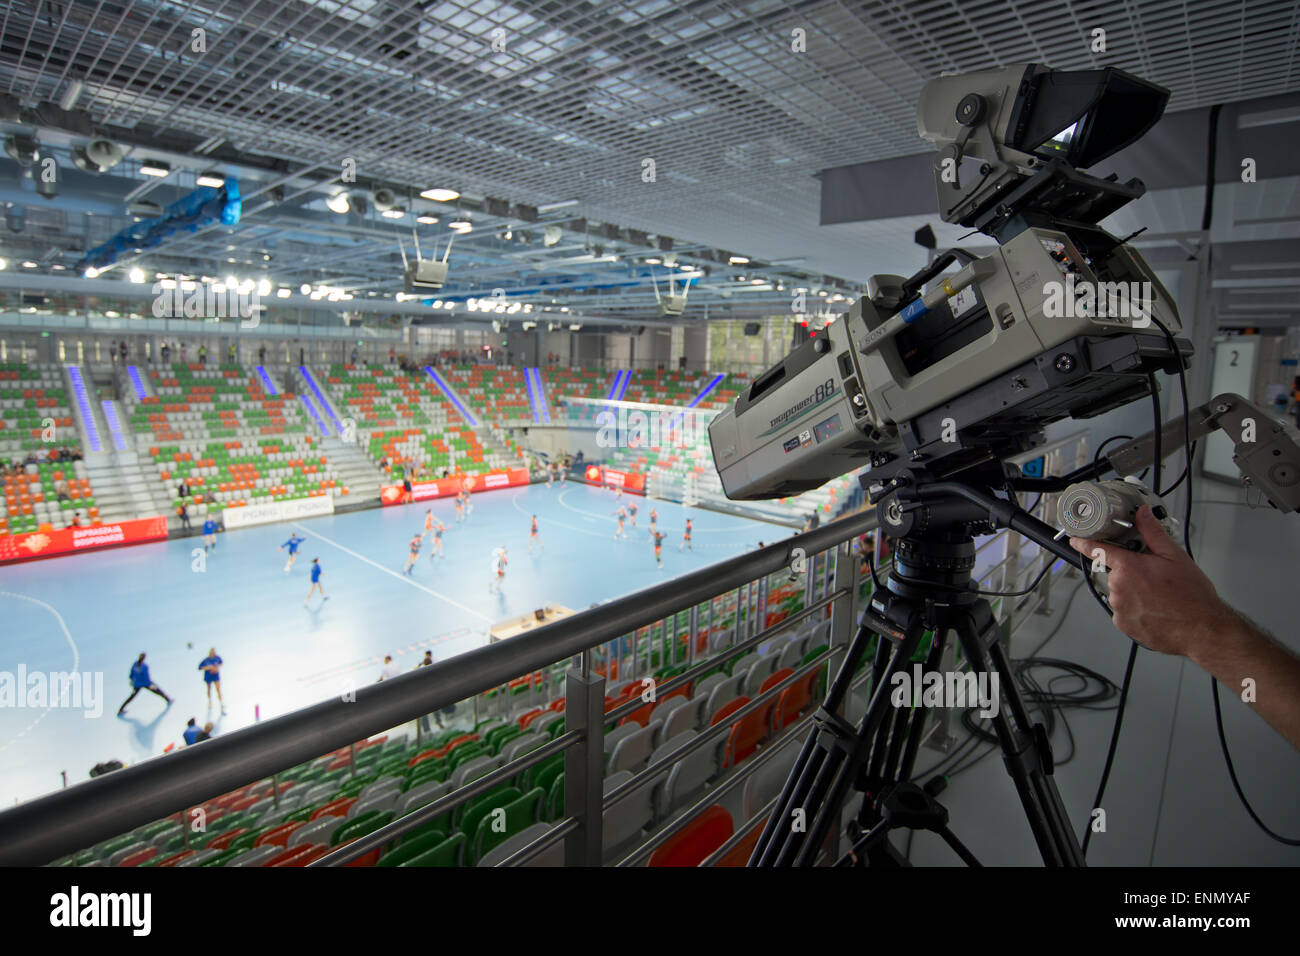 LUBIN, POLAND - SEPTEMBER 7, 2014: TV camera before match PGNiG Superleague Women in handball Stock Photo